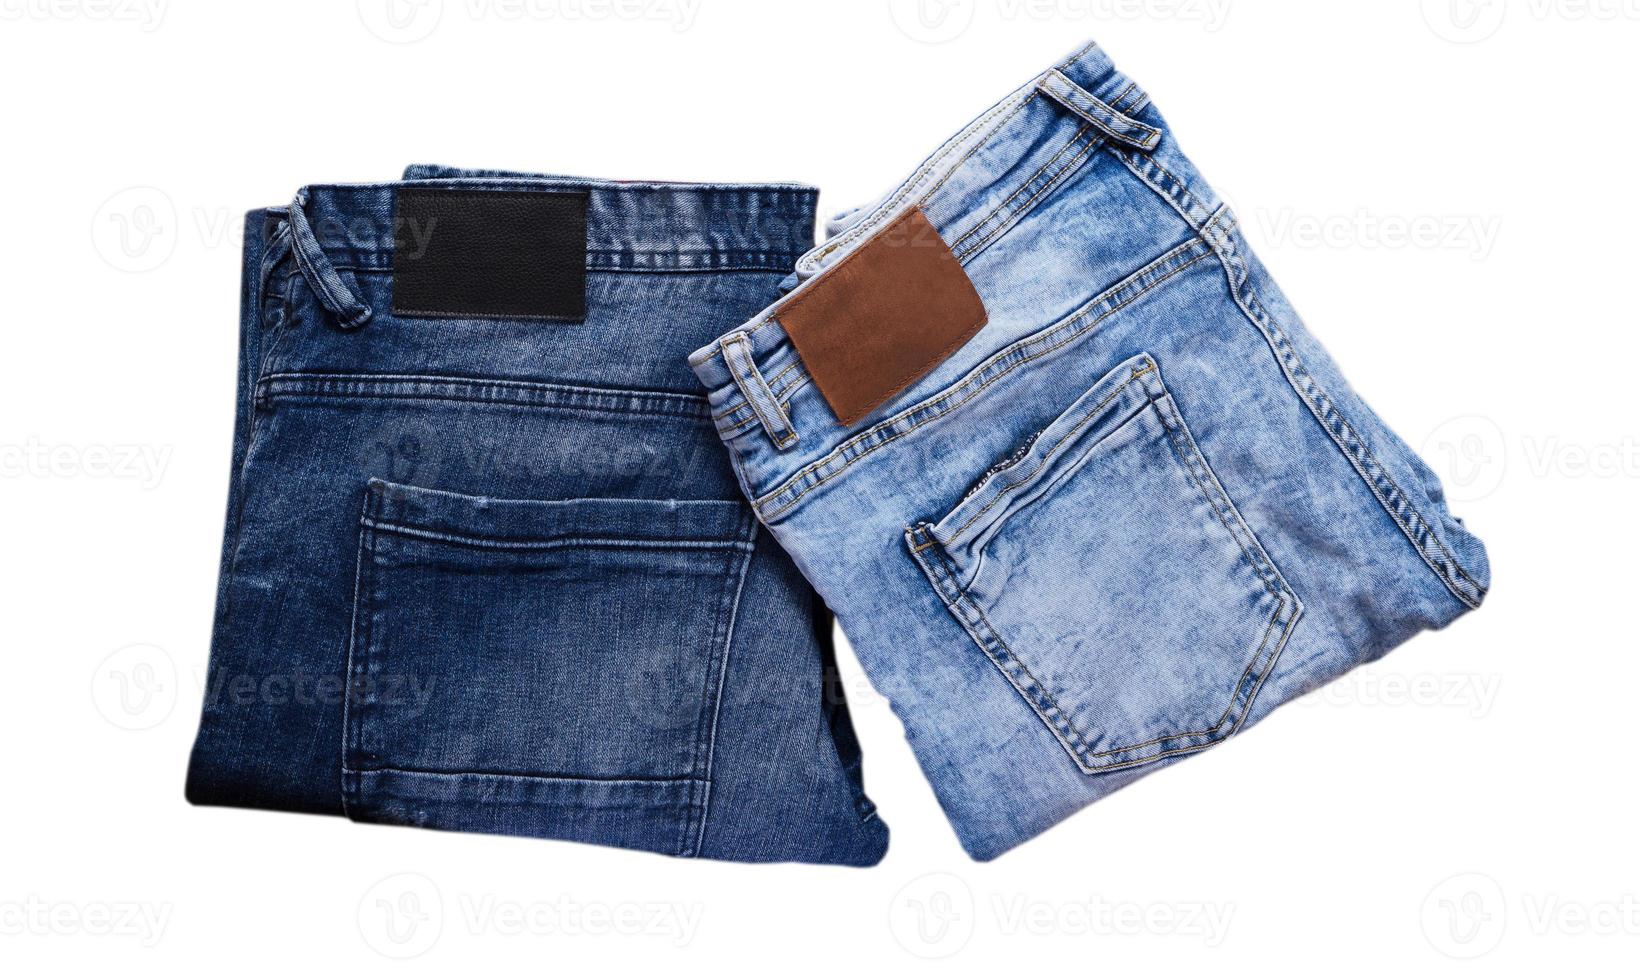 mezclilla doblada, jeans azul y azul oscuro sobre fondo blanco o collage foto